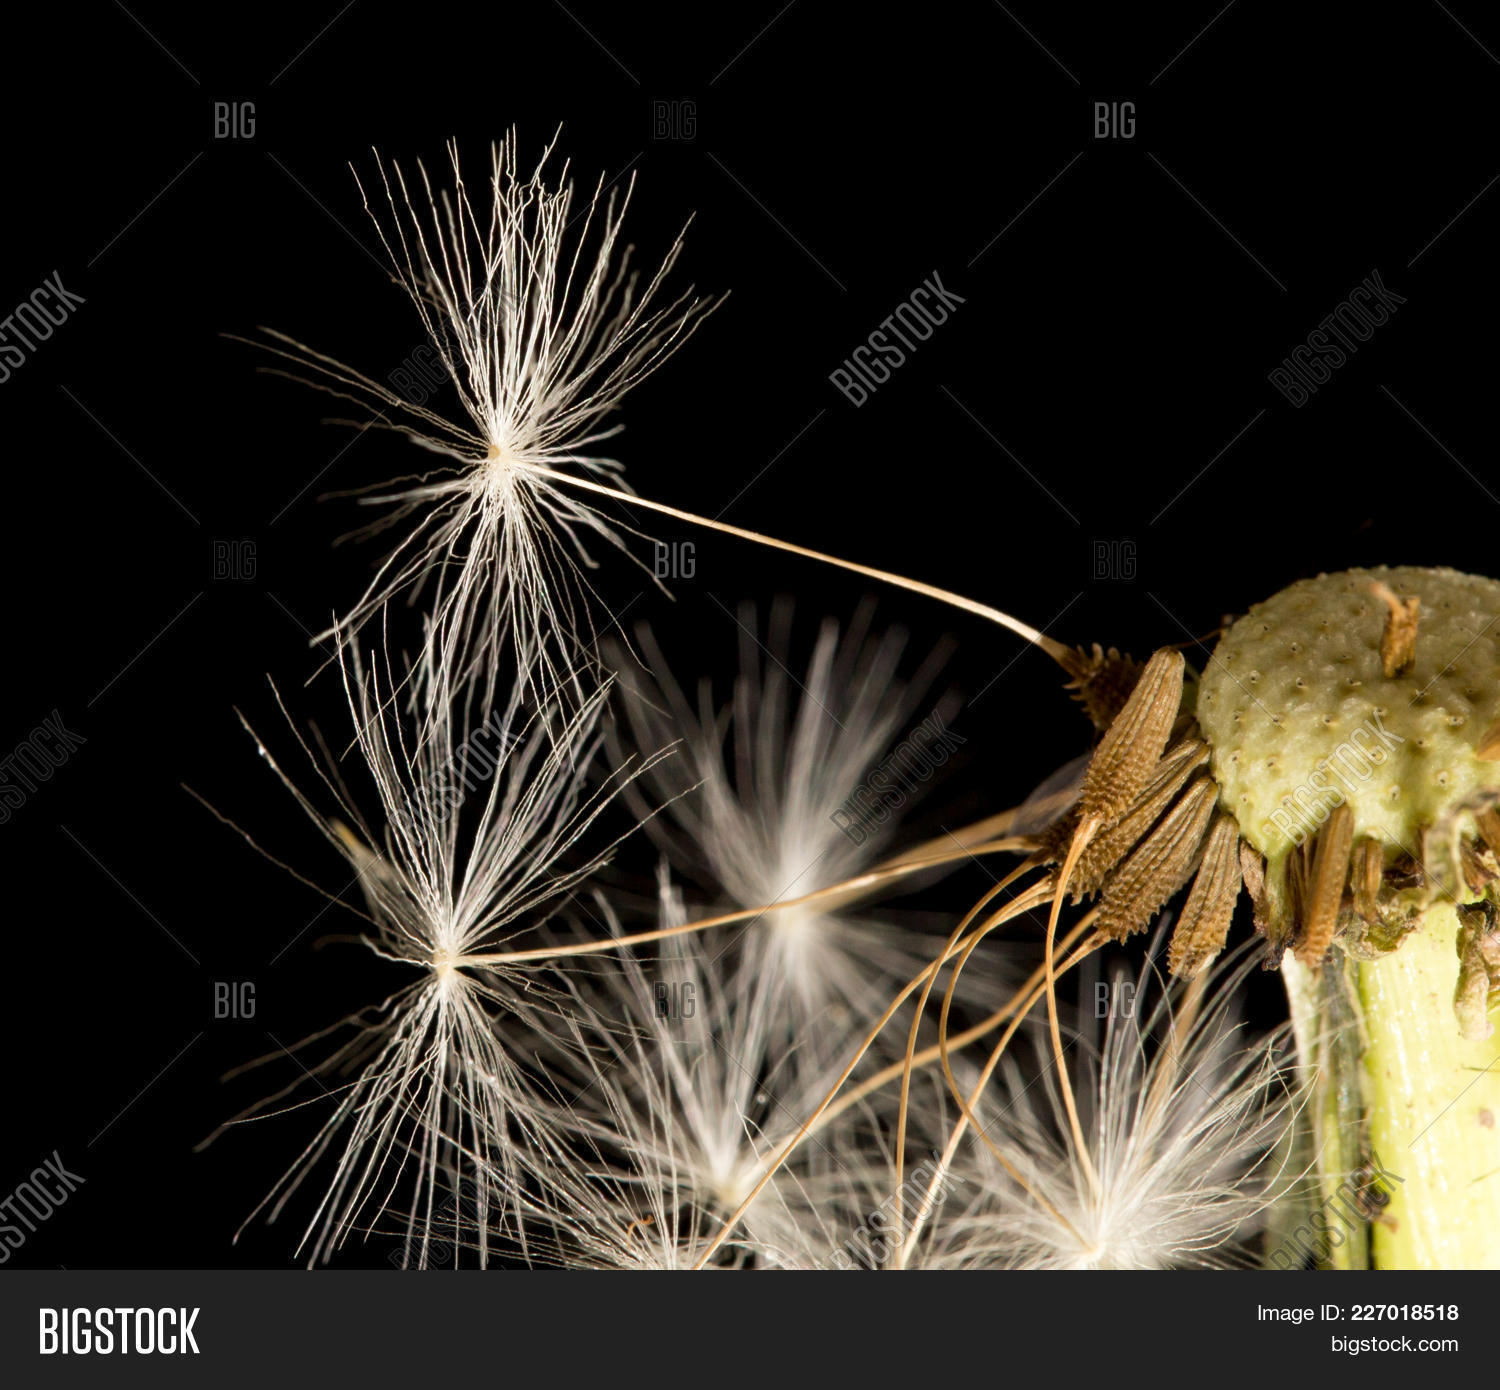 Dandelion Fluff On Black Background Image & Photo | Bigstock